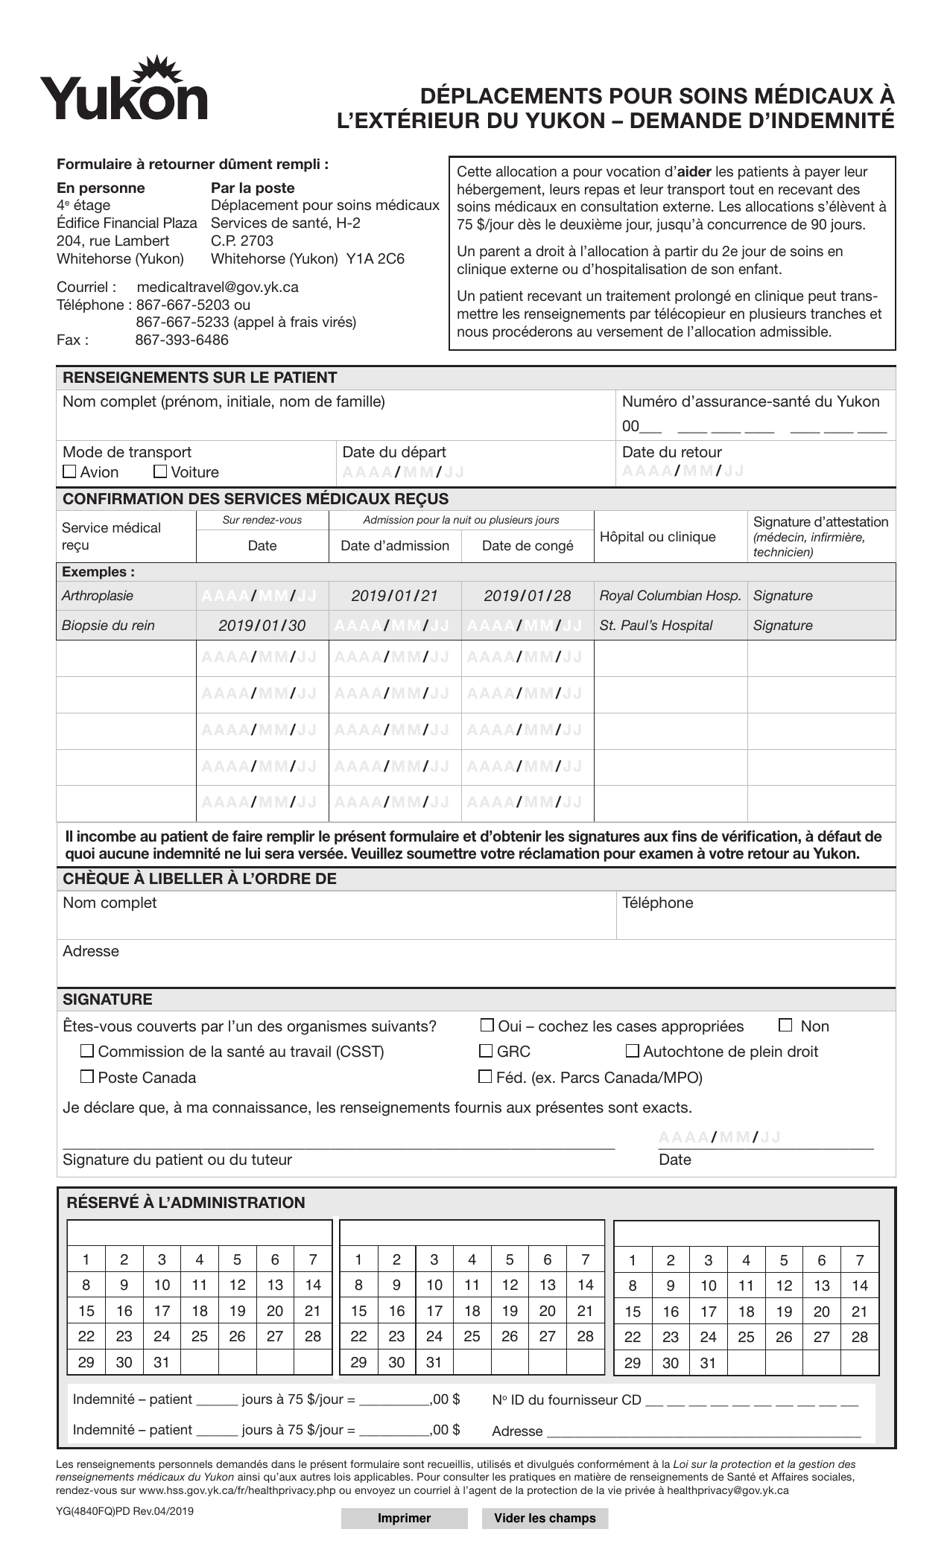 Forme YG4840 Deplacements Pour Soins Medicaux a Lexterieur Du Yukon - Demande Dindemnite - Yukon, Canada (French), Page 1